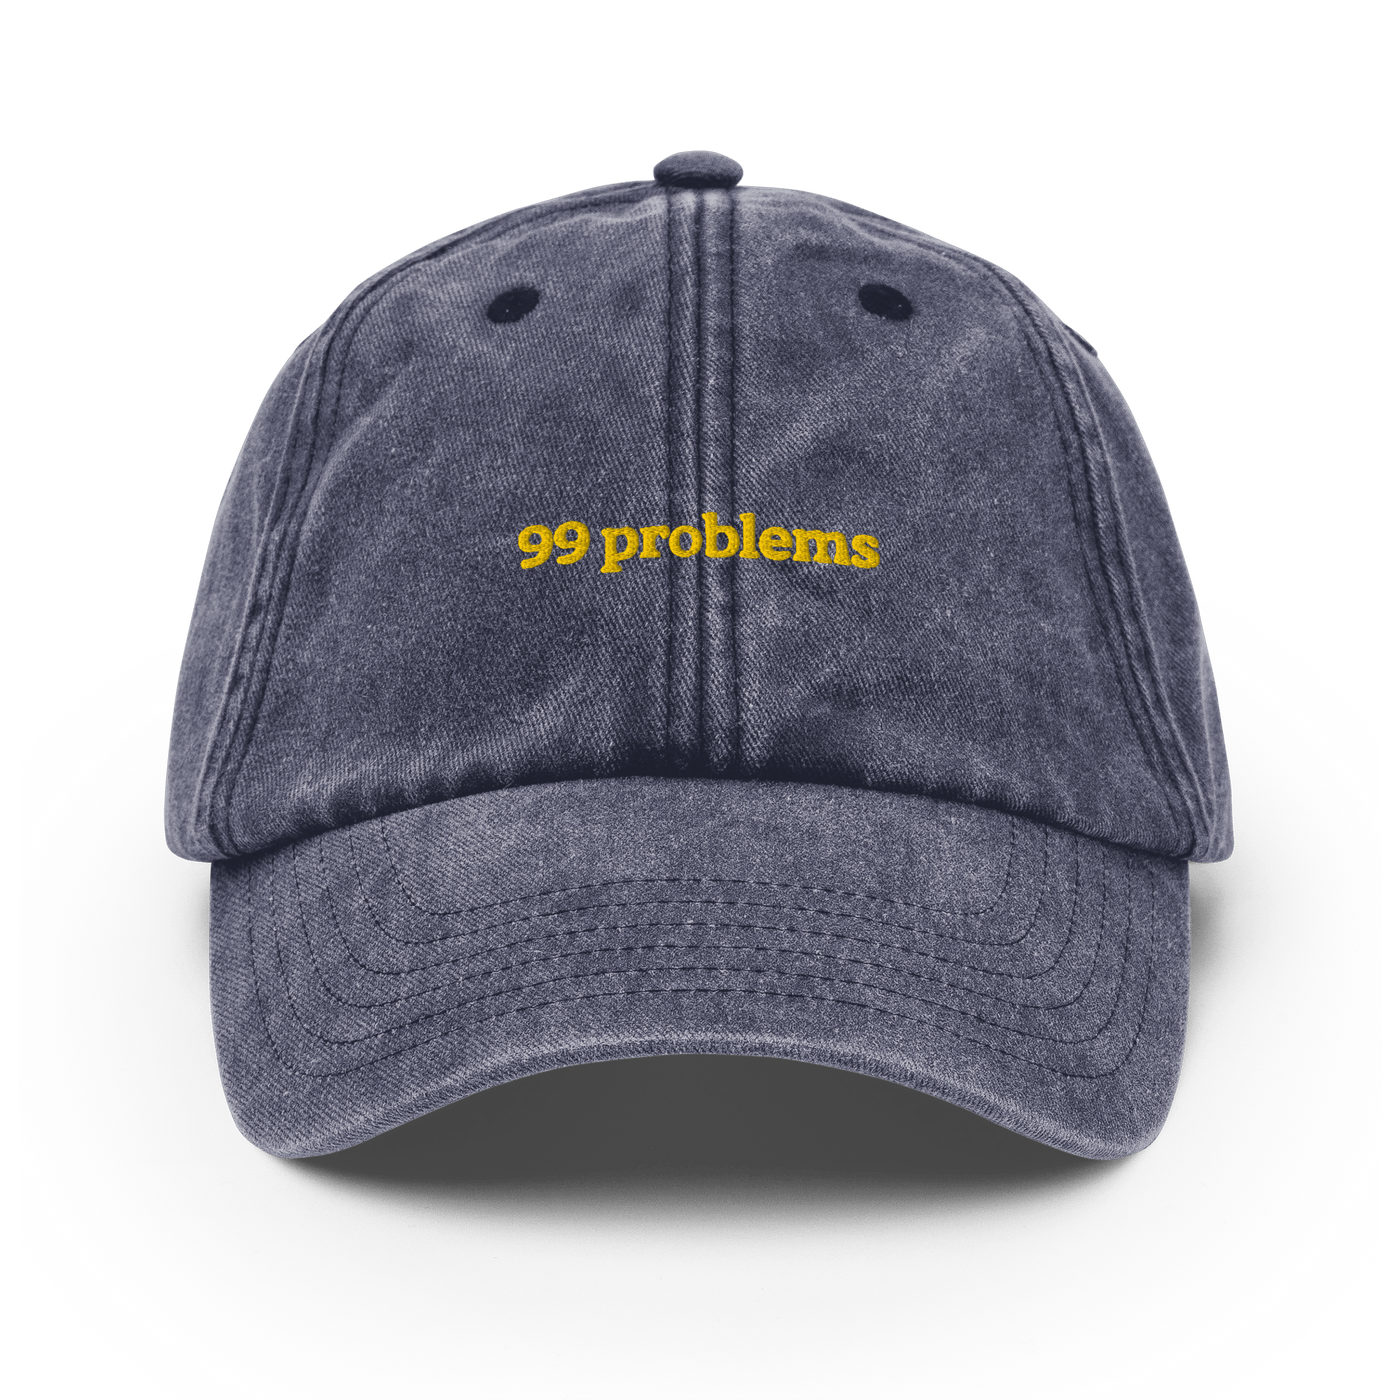 99 problems Vintage Hat - Vintage Denim - - Just Another Cap Store